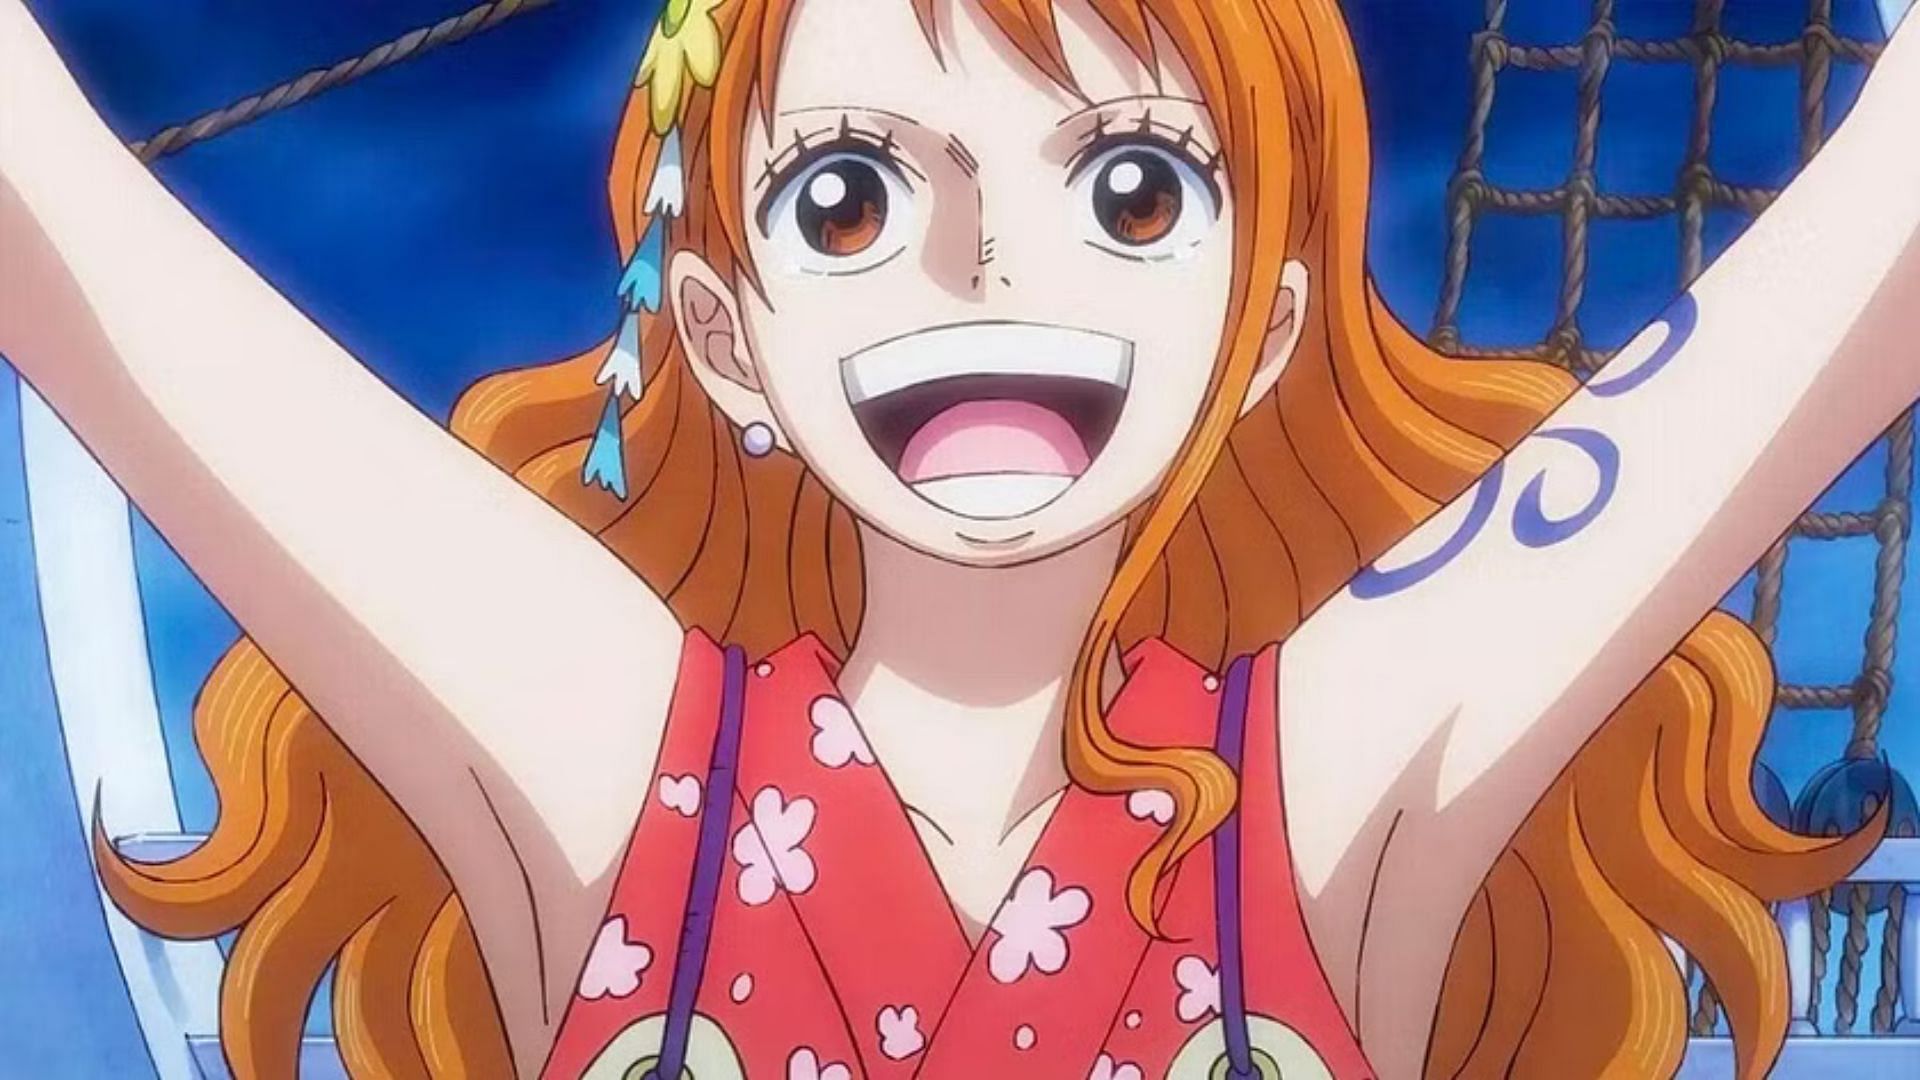 Nami as shown in anime (Image via Studio Toei Animation)